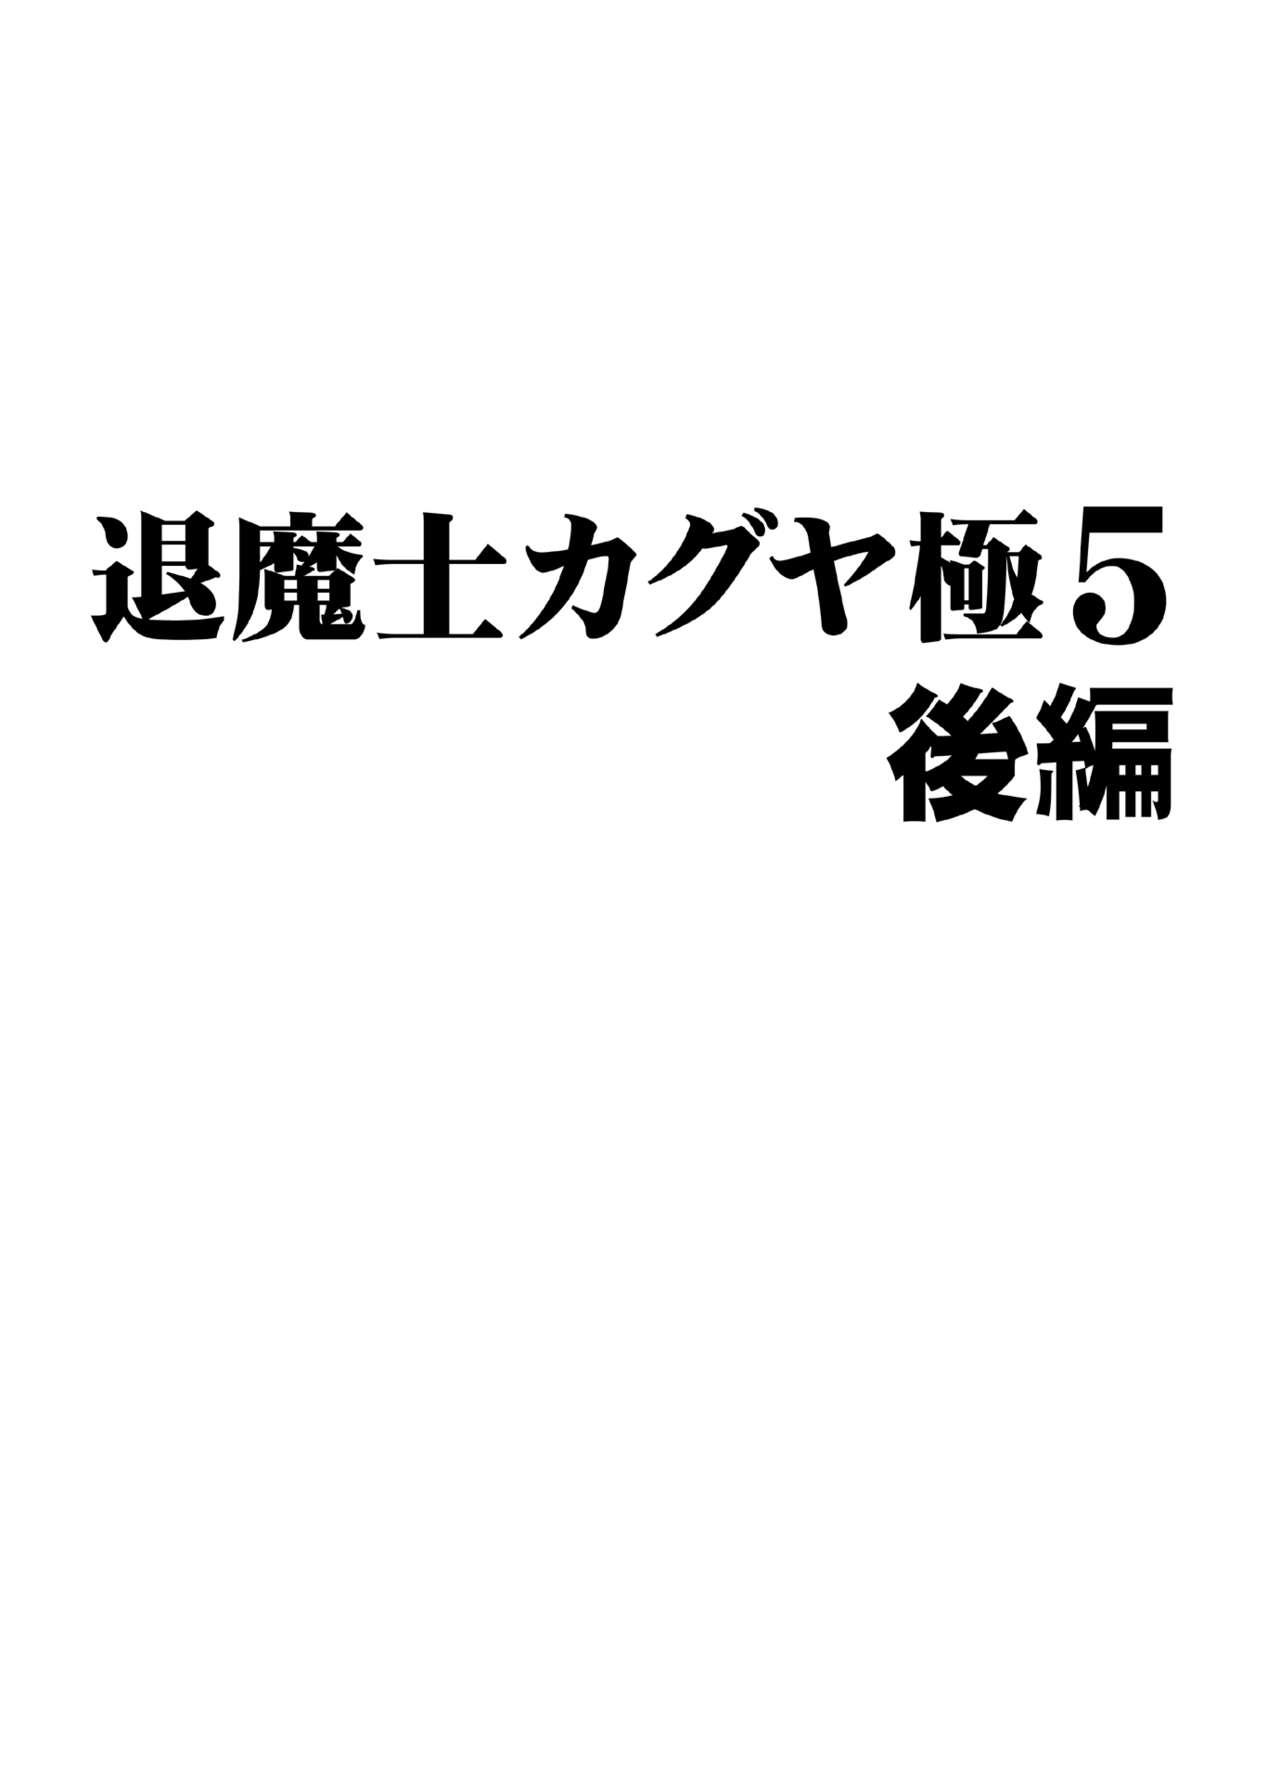 taimashi kaguya kiwami 5 39